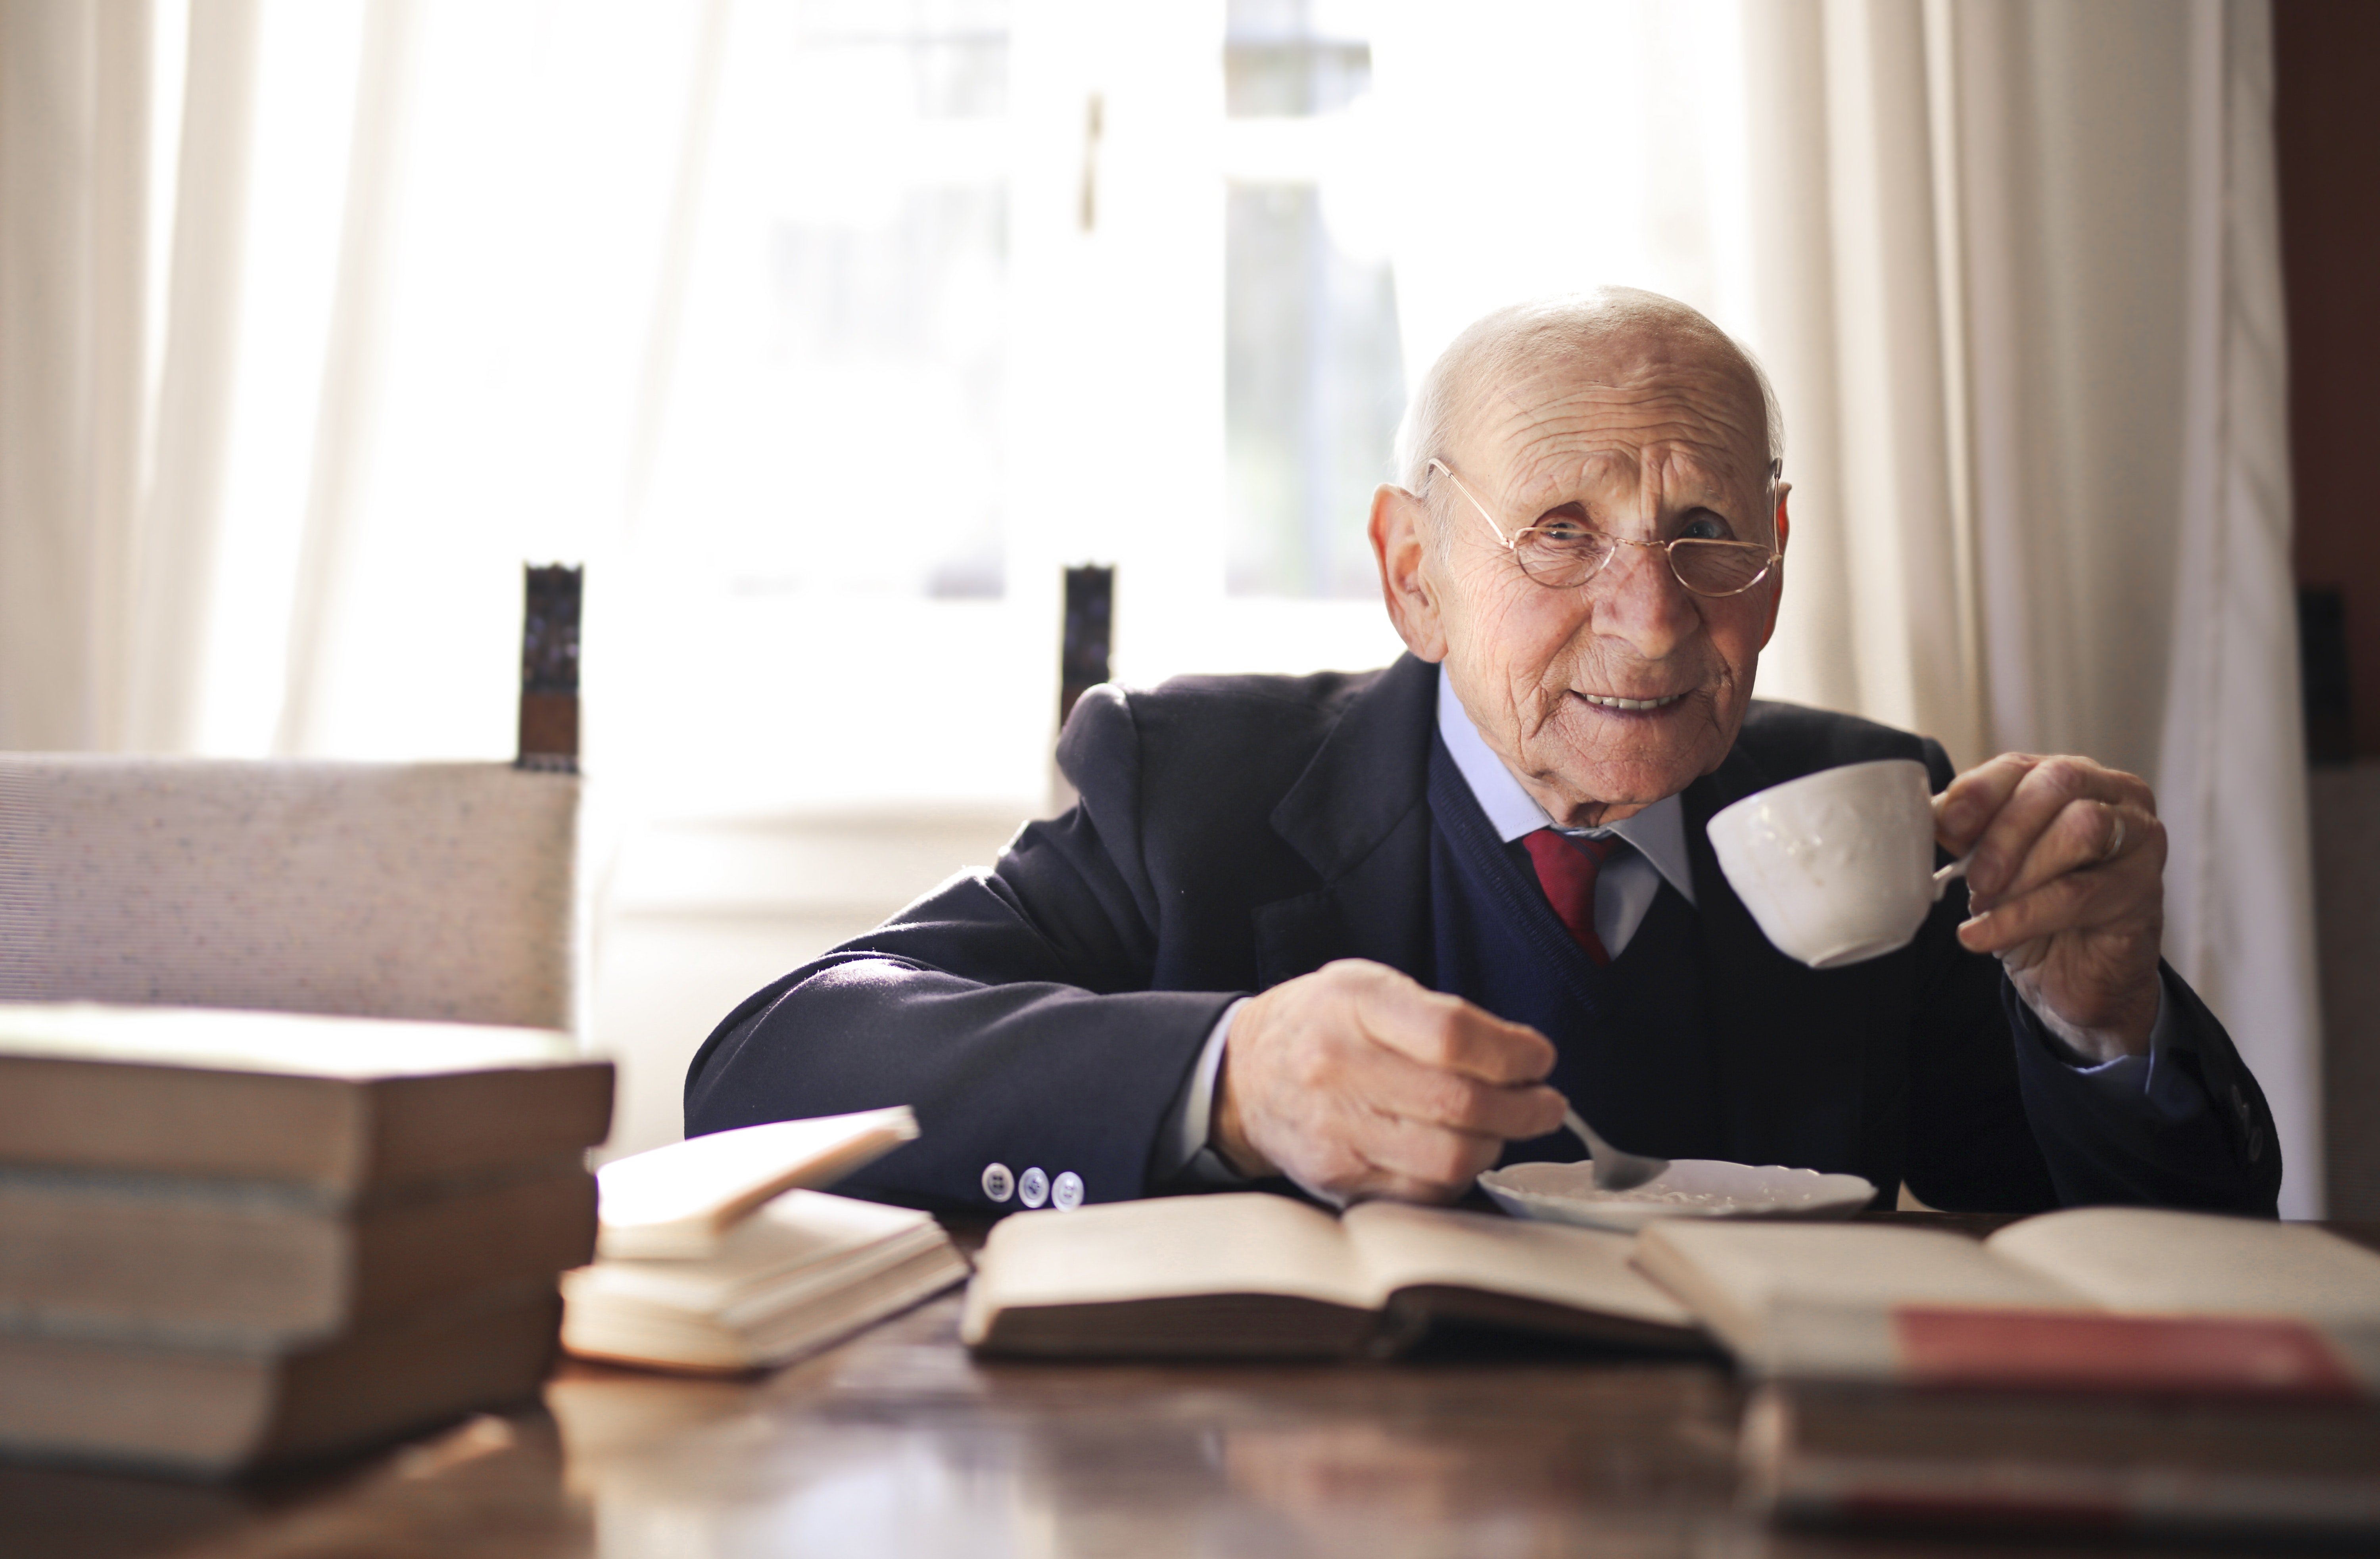 An elderly man having his morning coffee | Source: Pexel